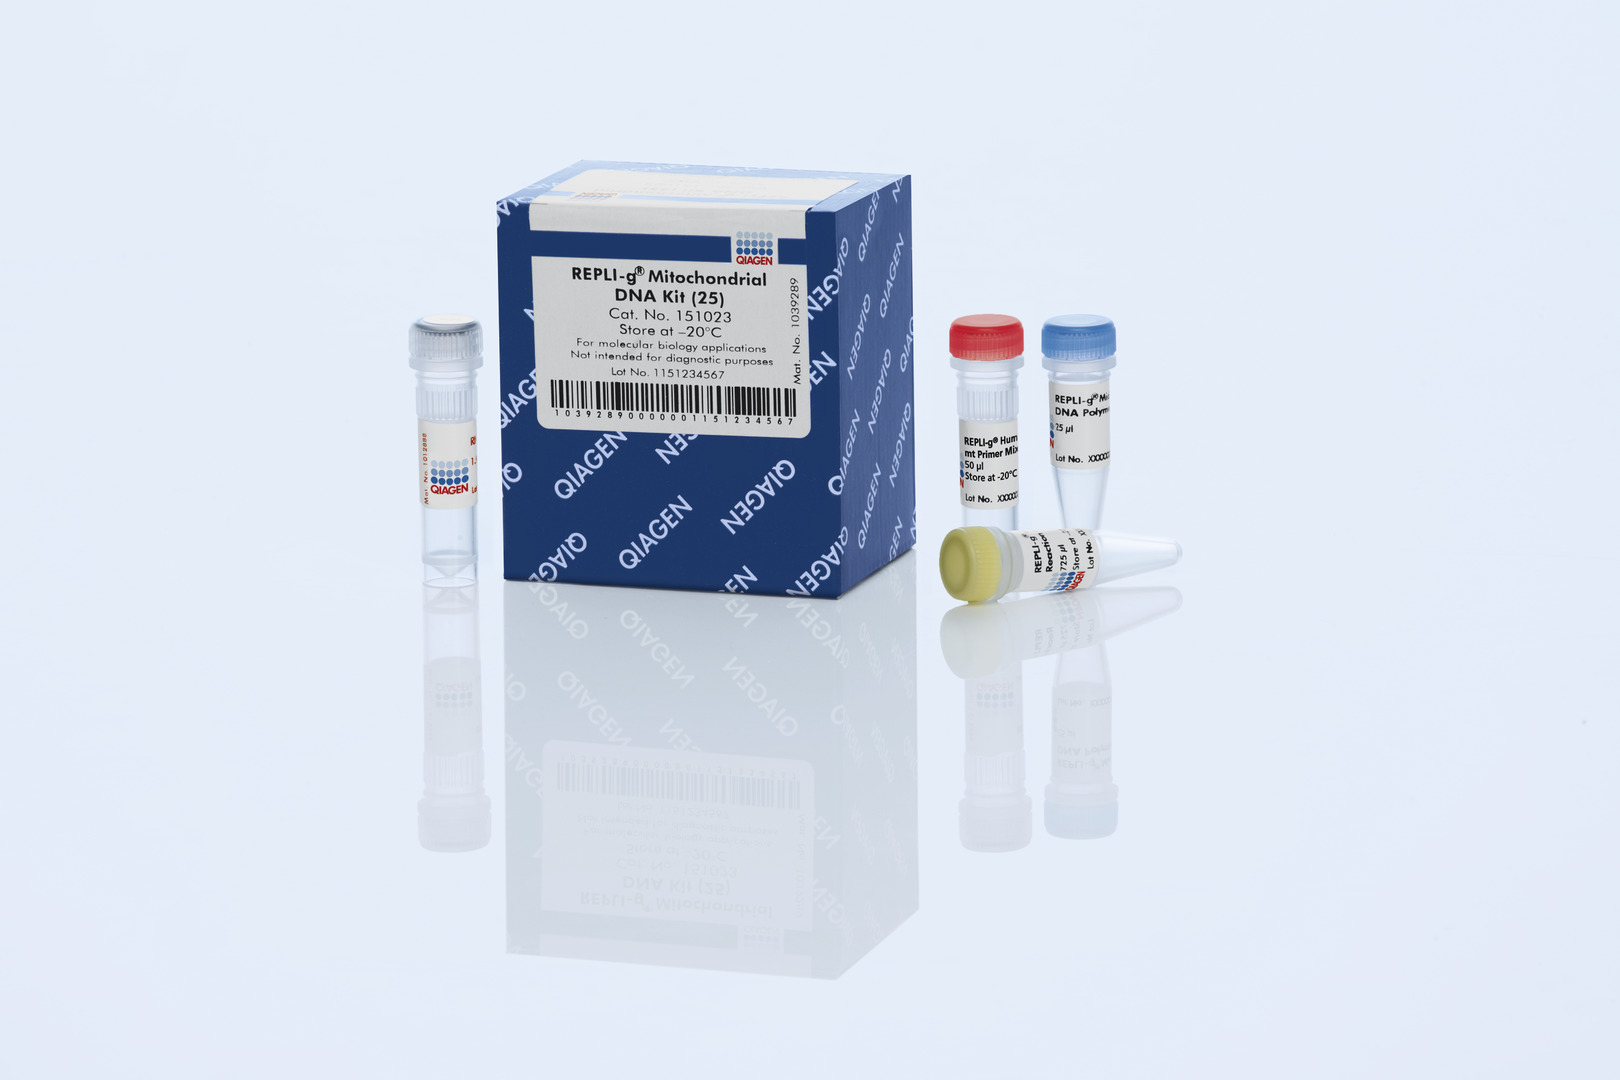 REPLI-g Mitochondrial DNA Kit